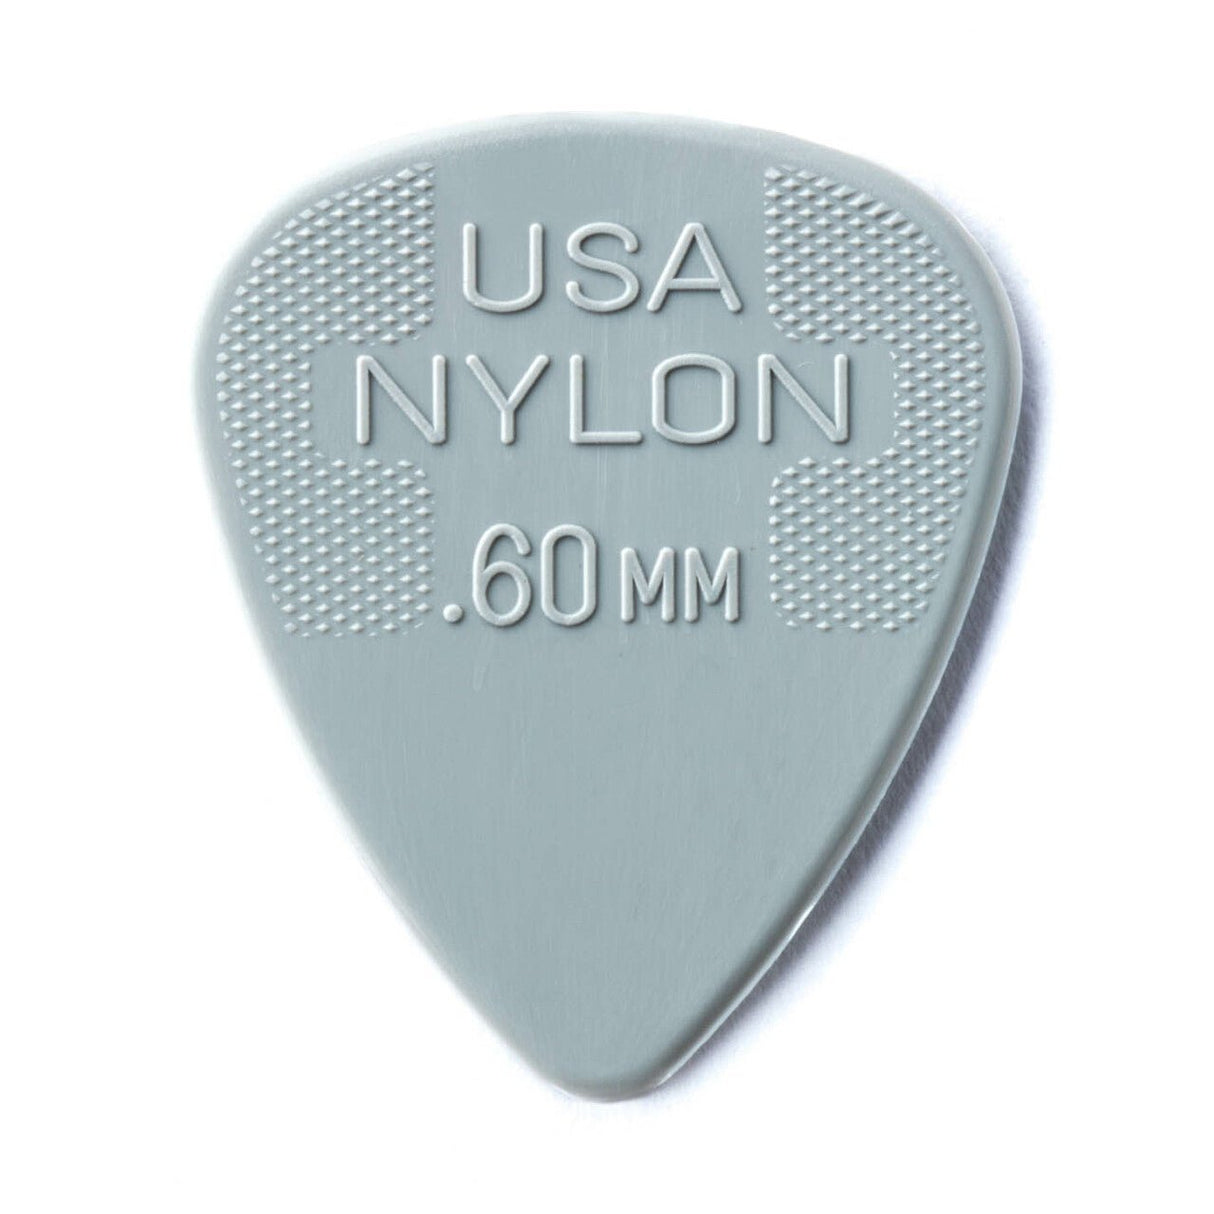 Dunlop Nylon Standard Picks (12 Pack) - Picks - Dunlop